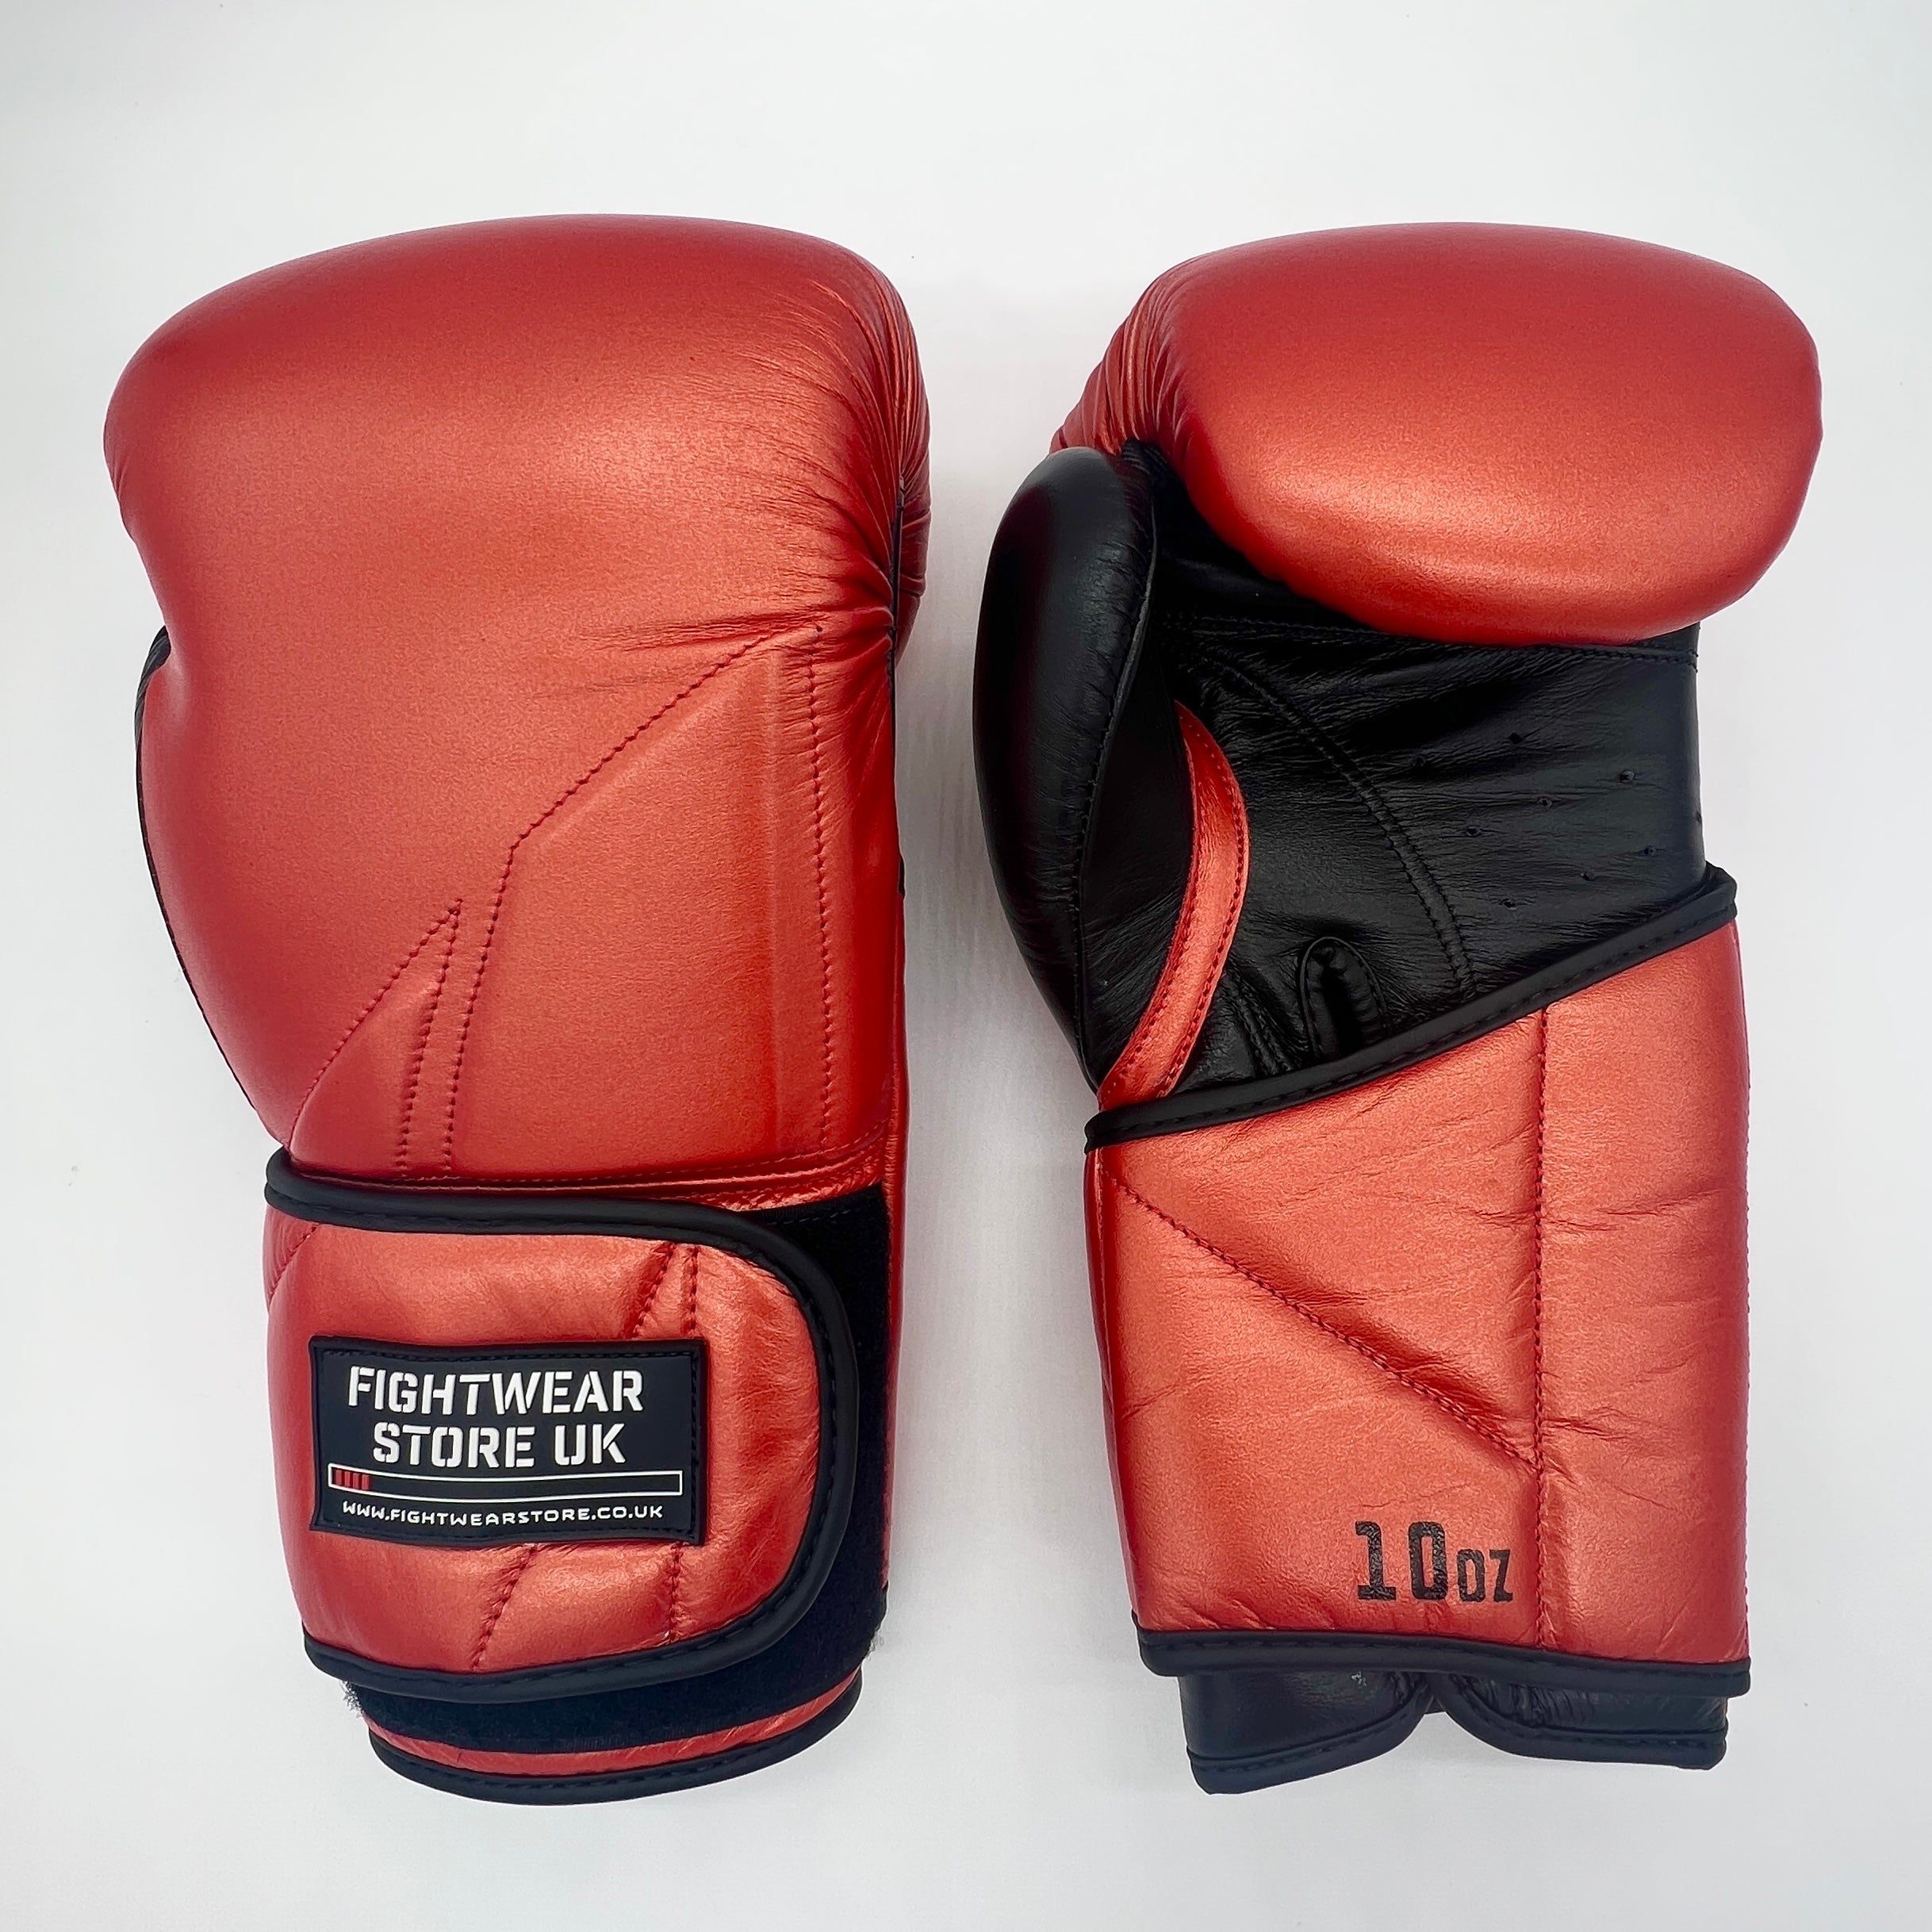 Fightwear Store UK Vesta: Metallic Red Boxing Gloves